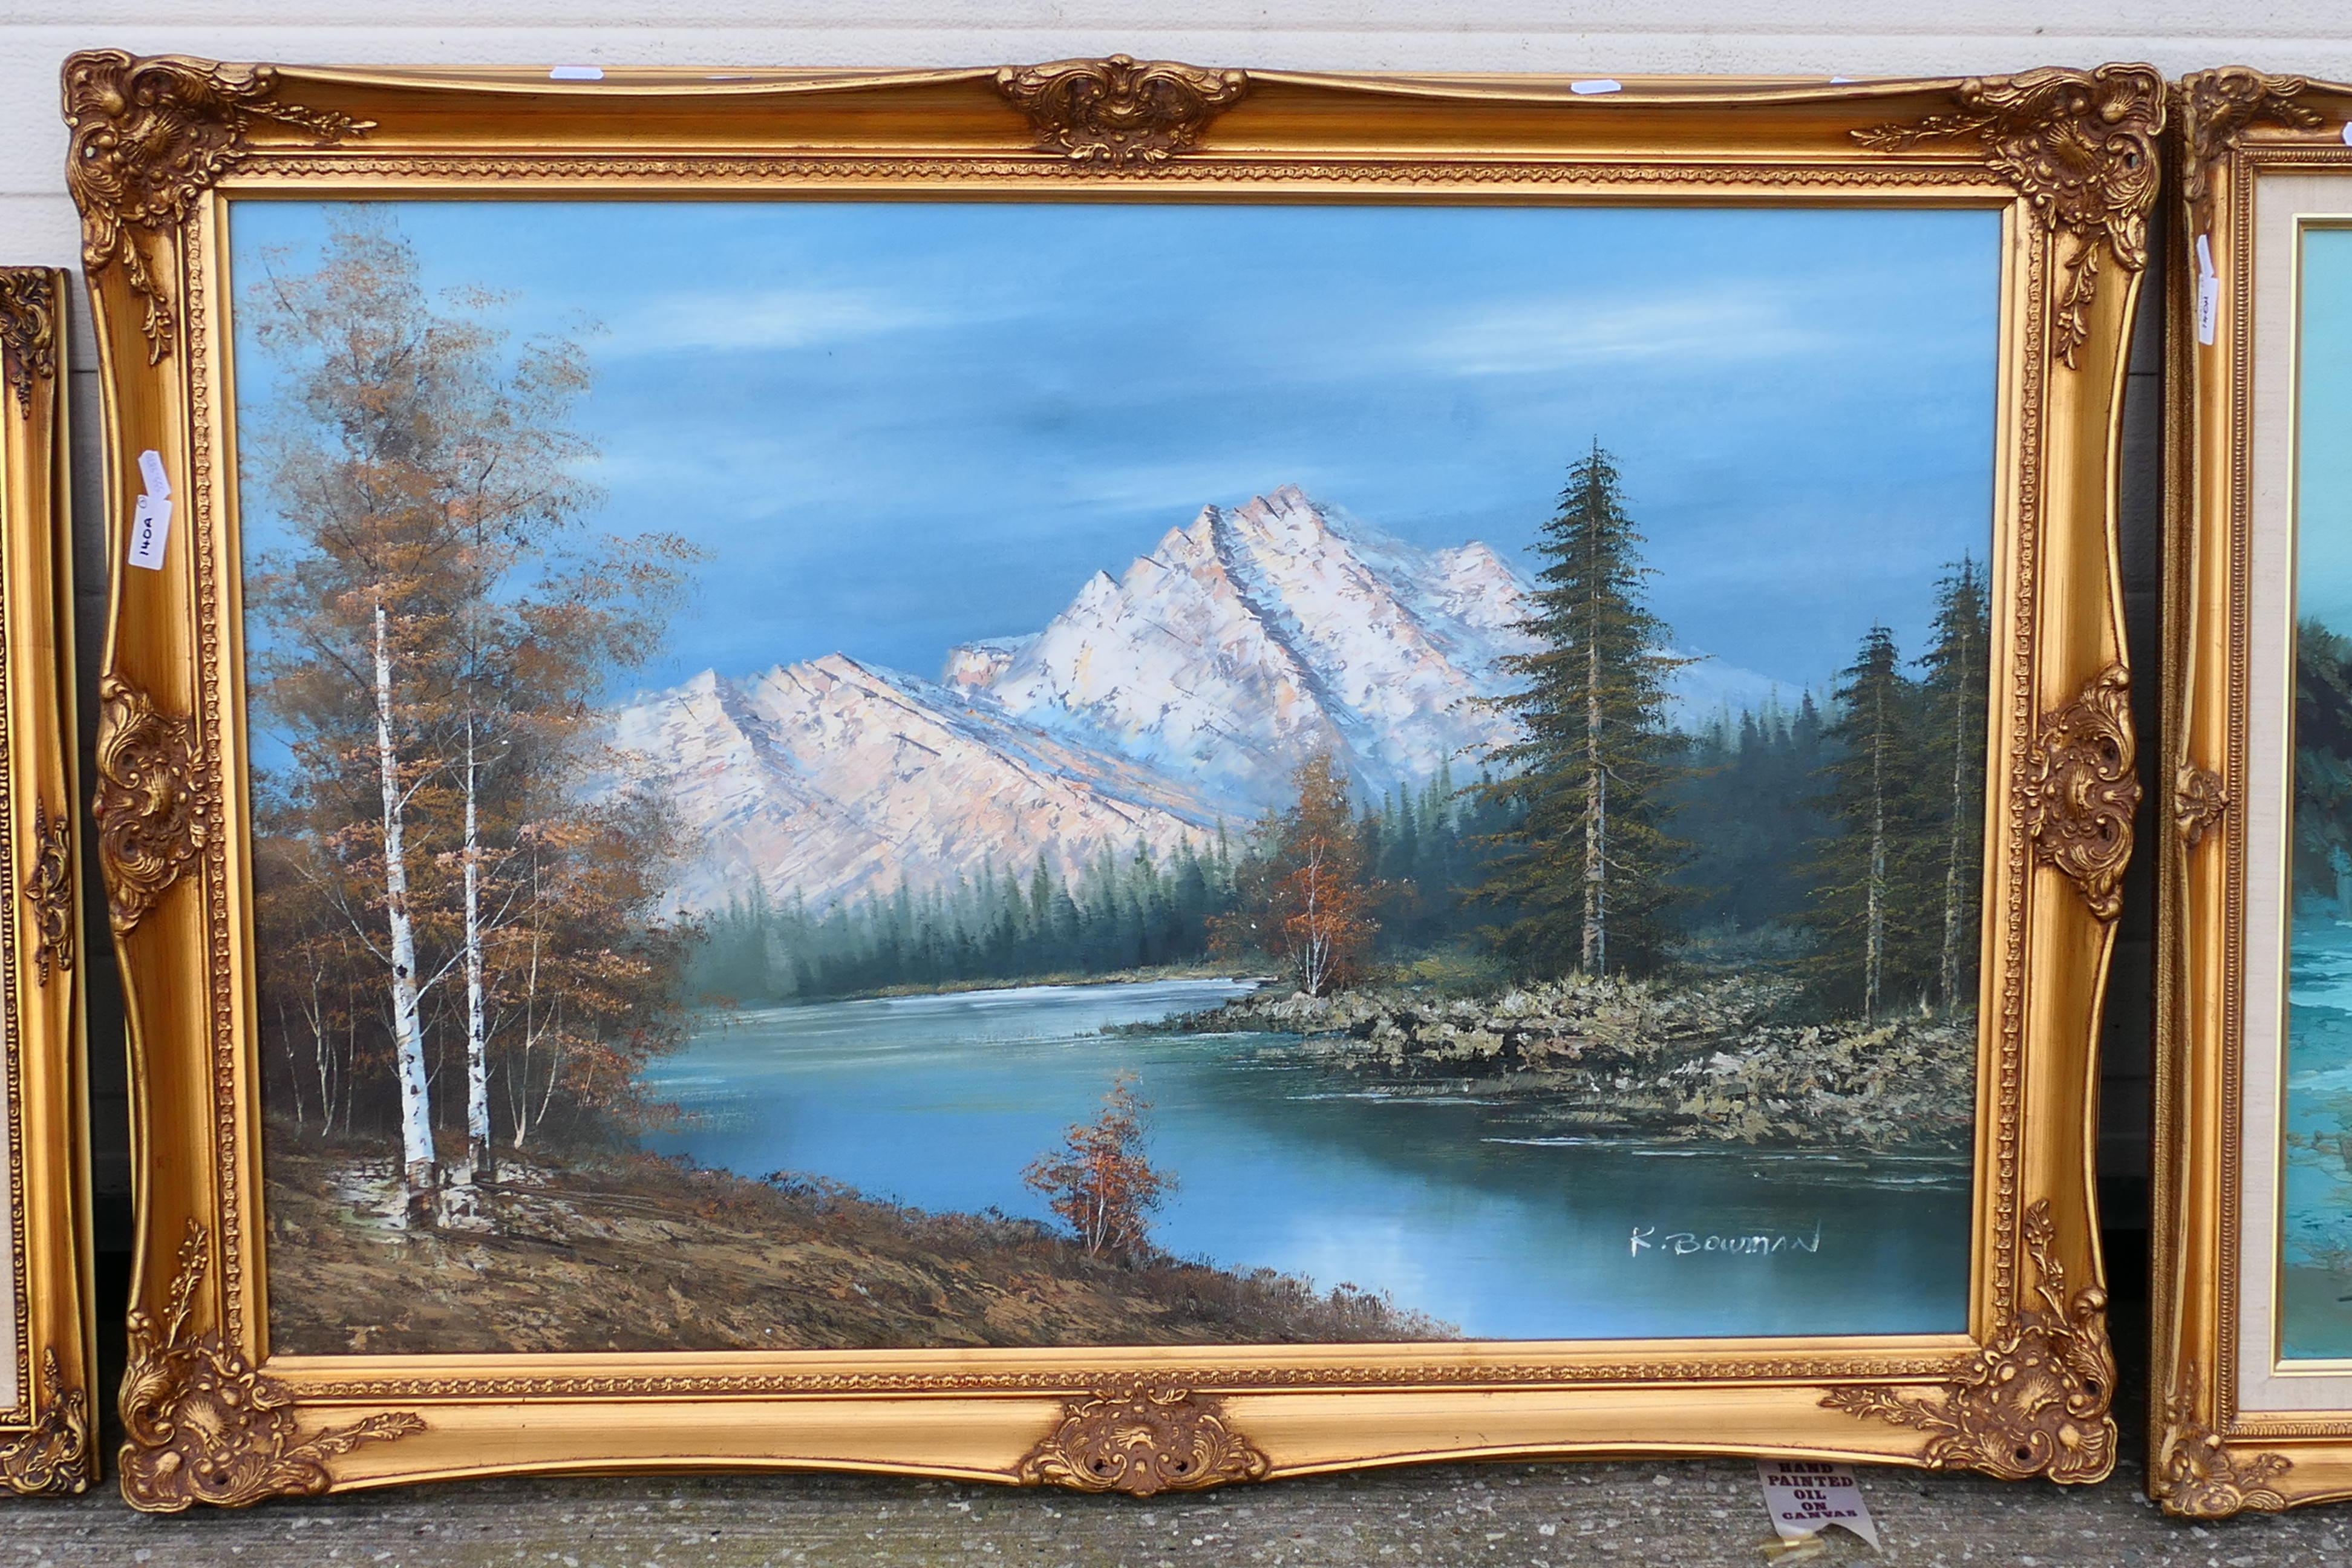 Three gilt framed oil on canvas landscape scenes, largest approximately 60 cm x 90 cm image size. - Image 3 of 4